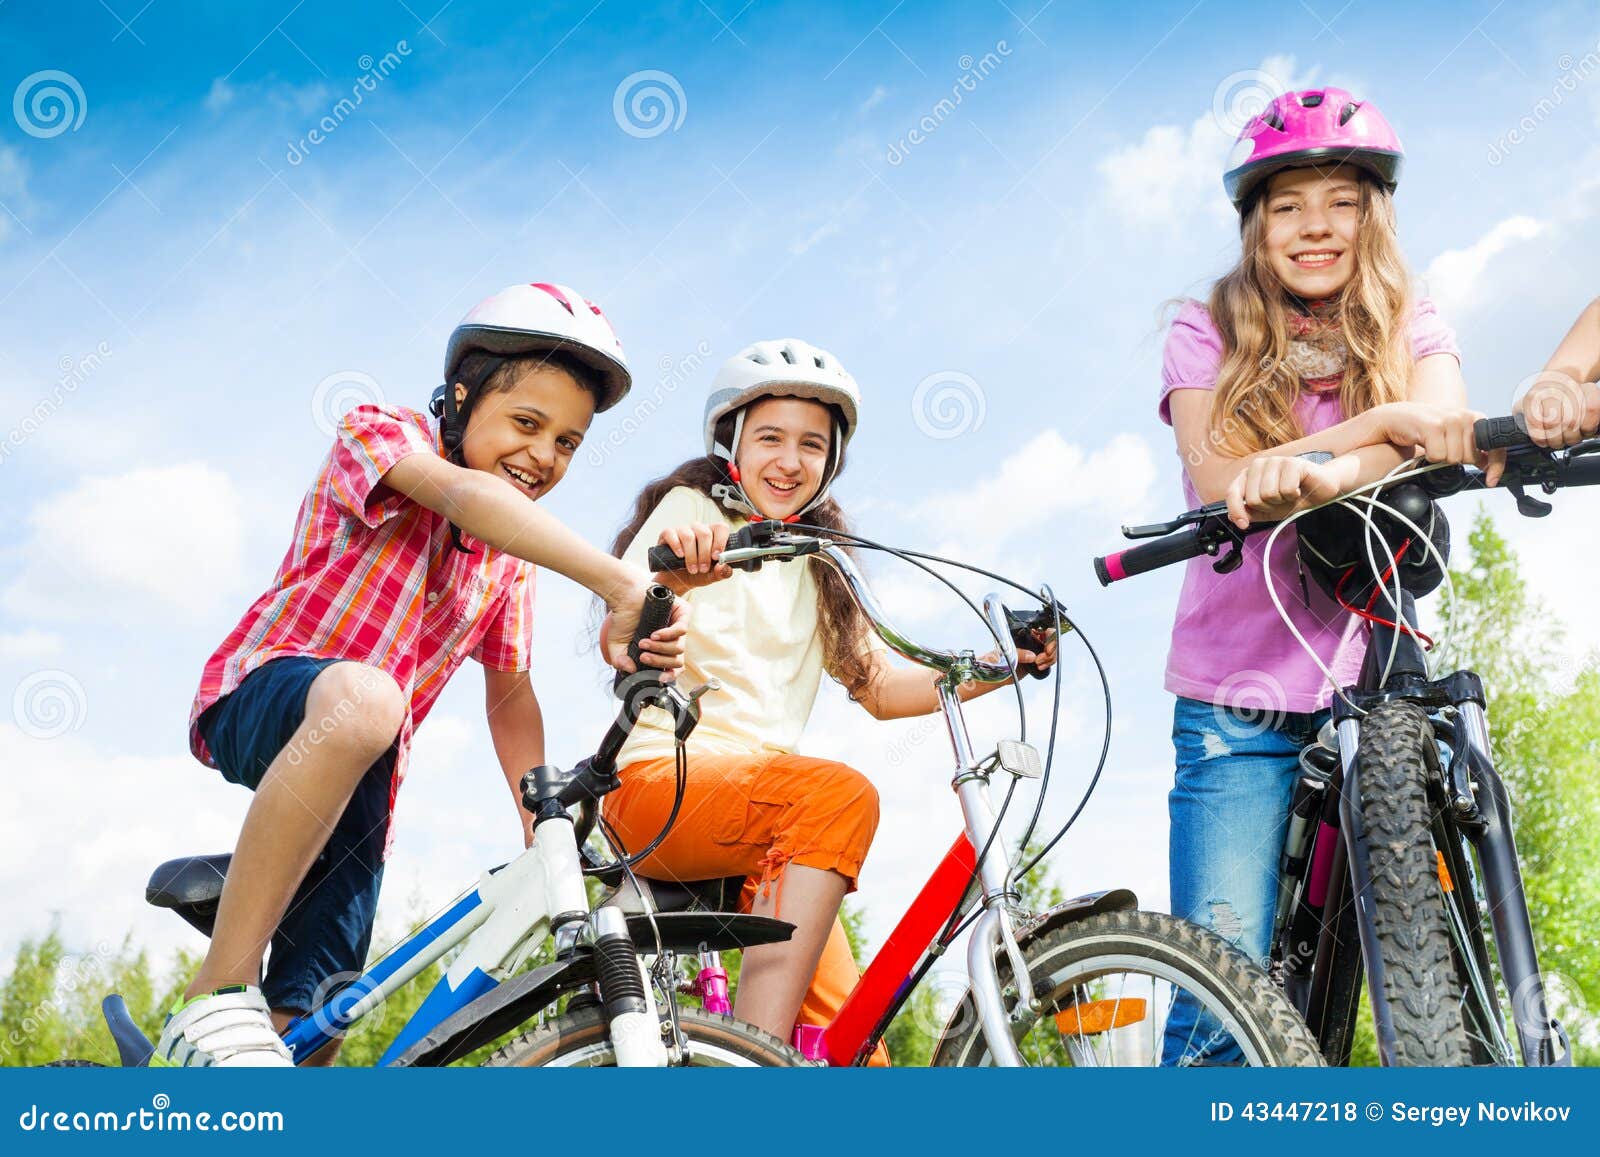 laughing kids in helmets hold bike handle-bars